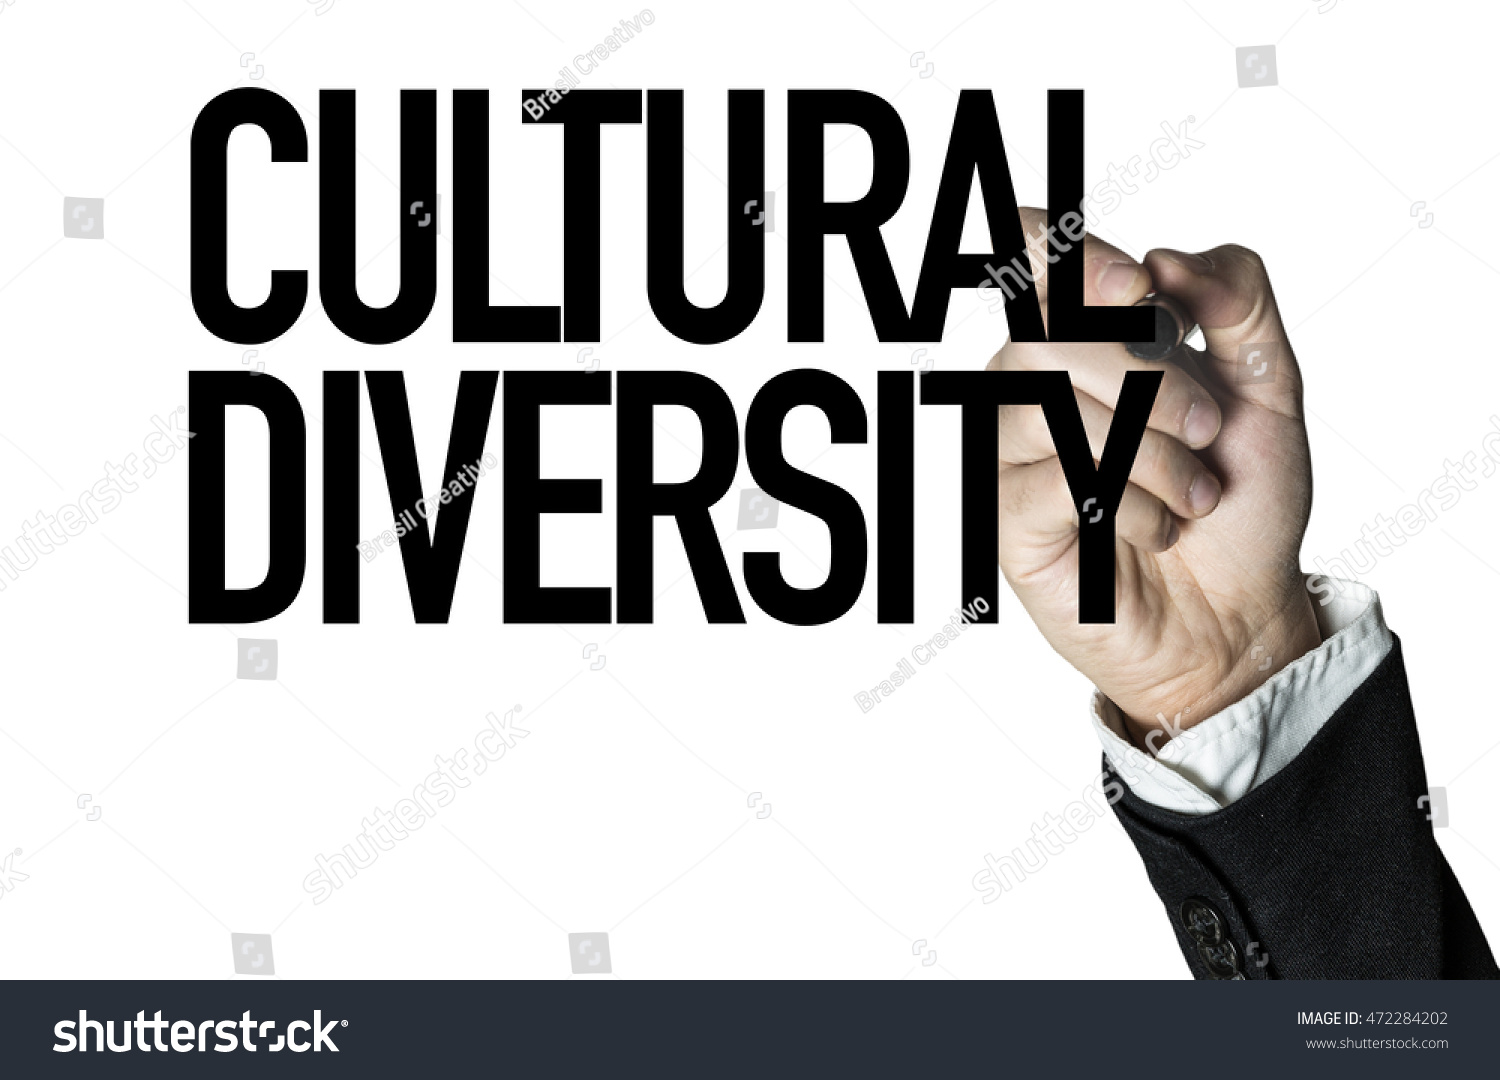 Cultural Diversity Stock Photo 472284202 : Shutterstock